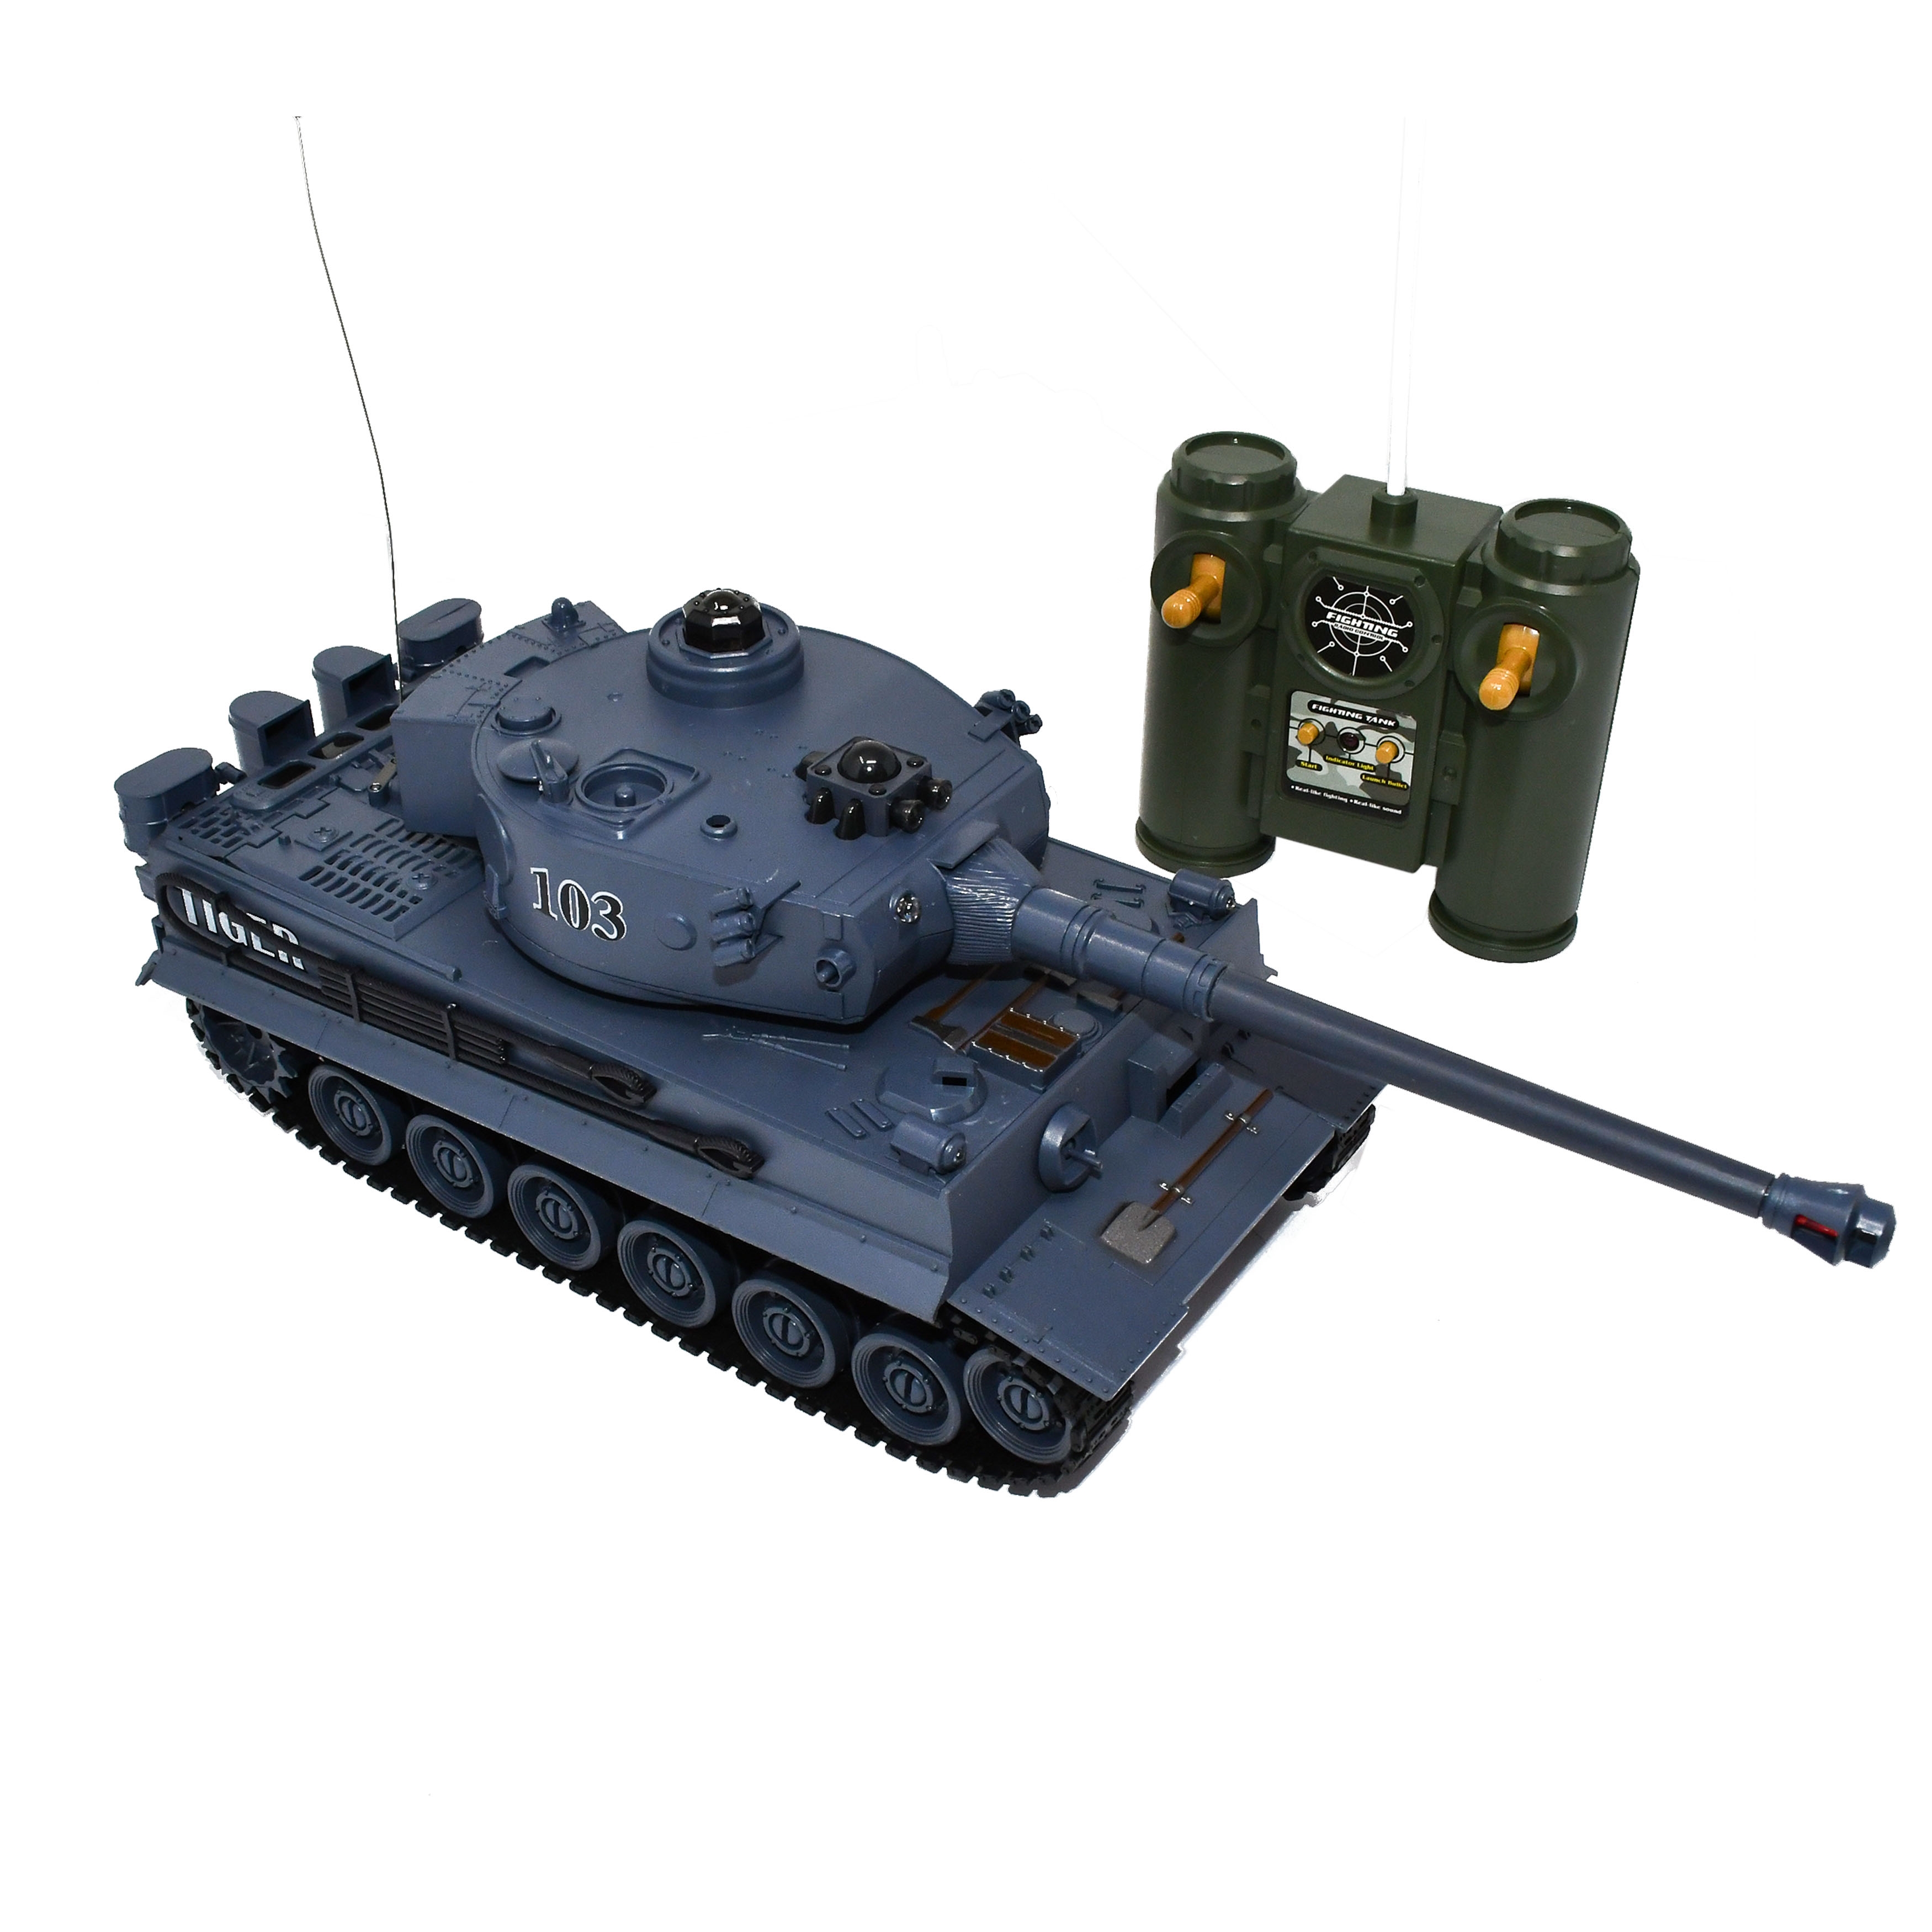 remote control battle tanks